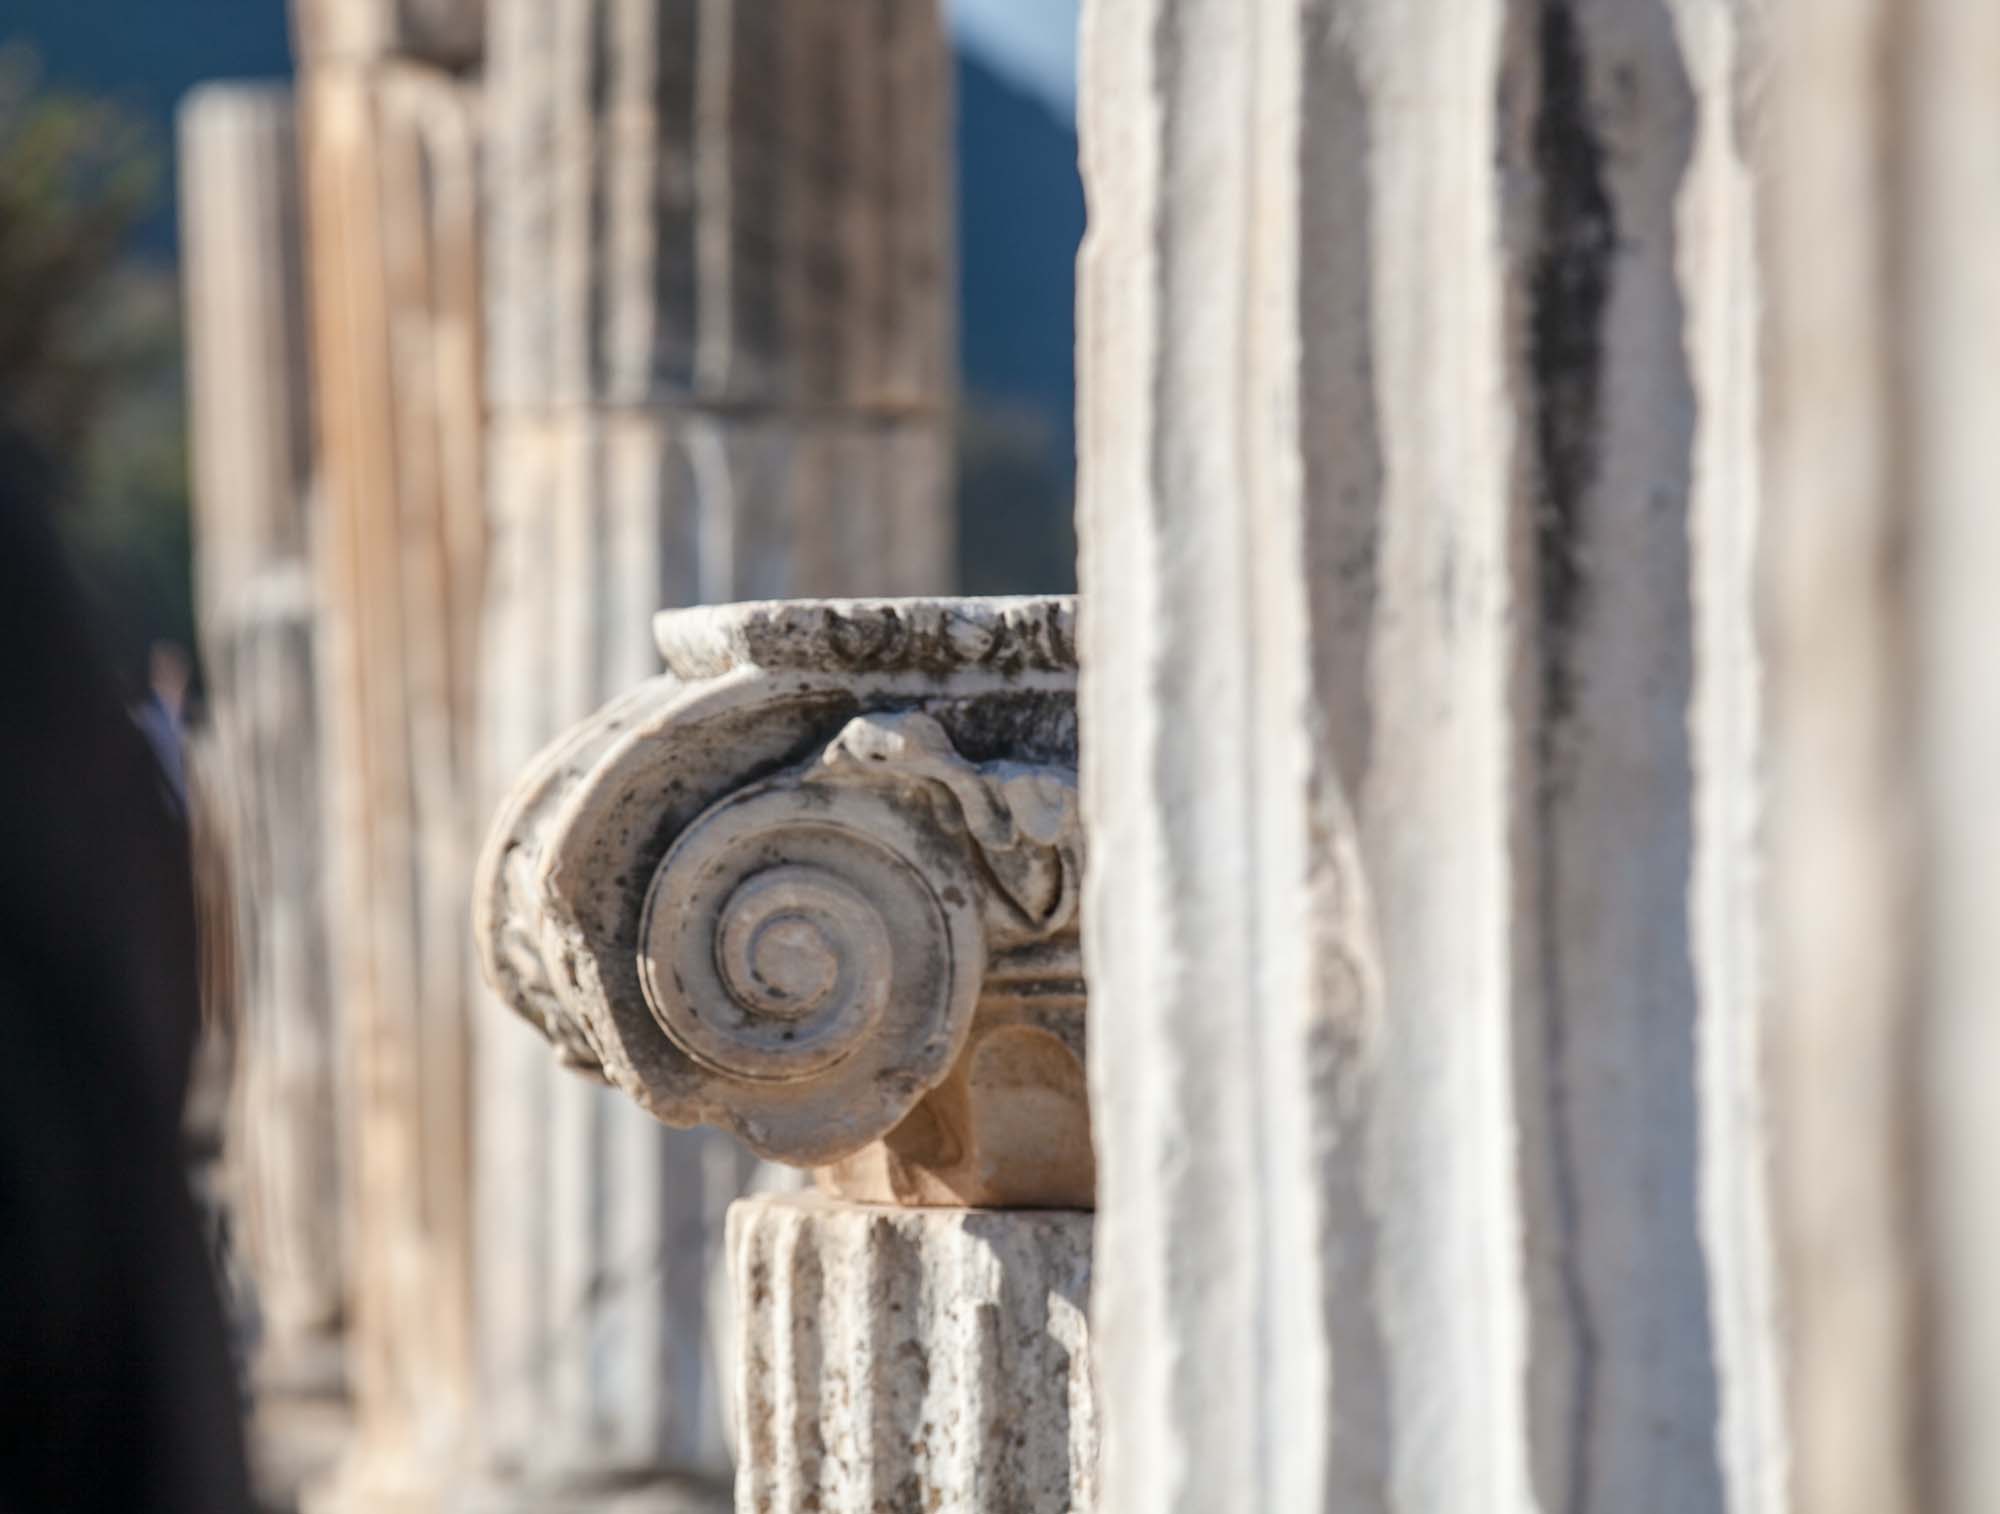 Ephesus column